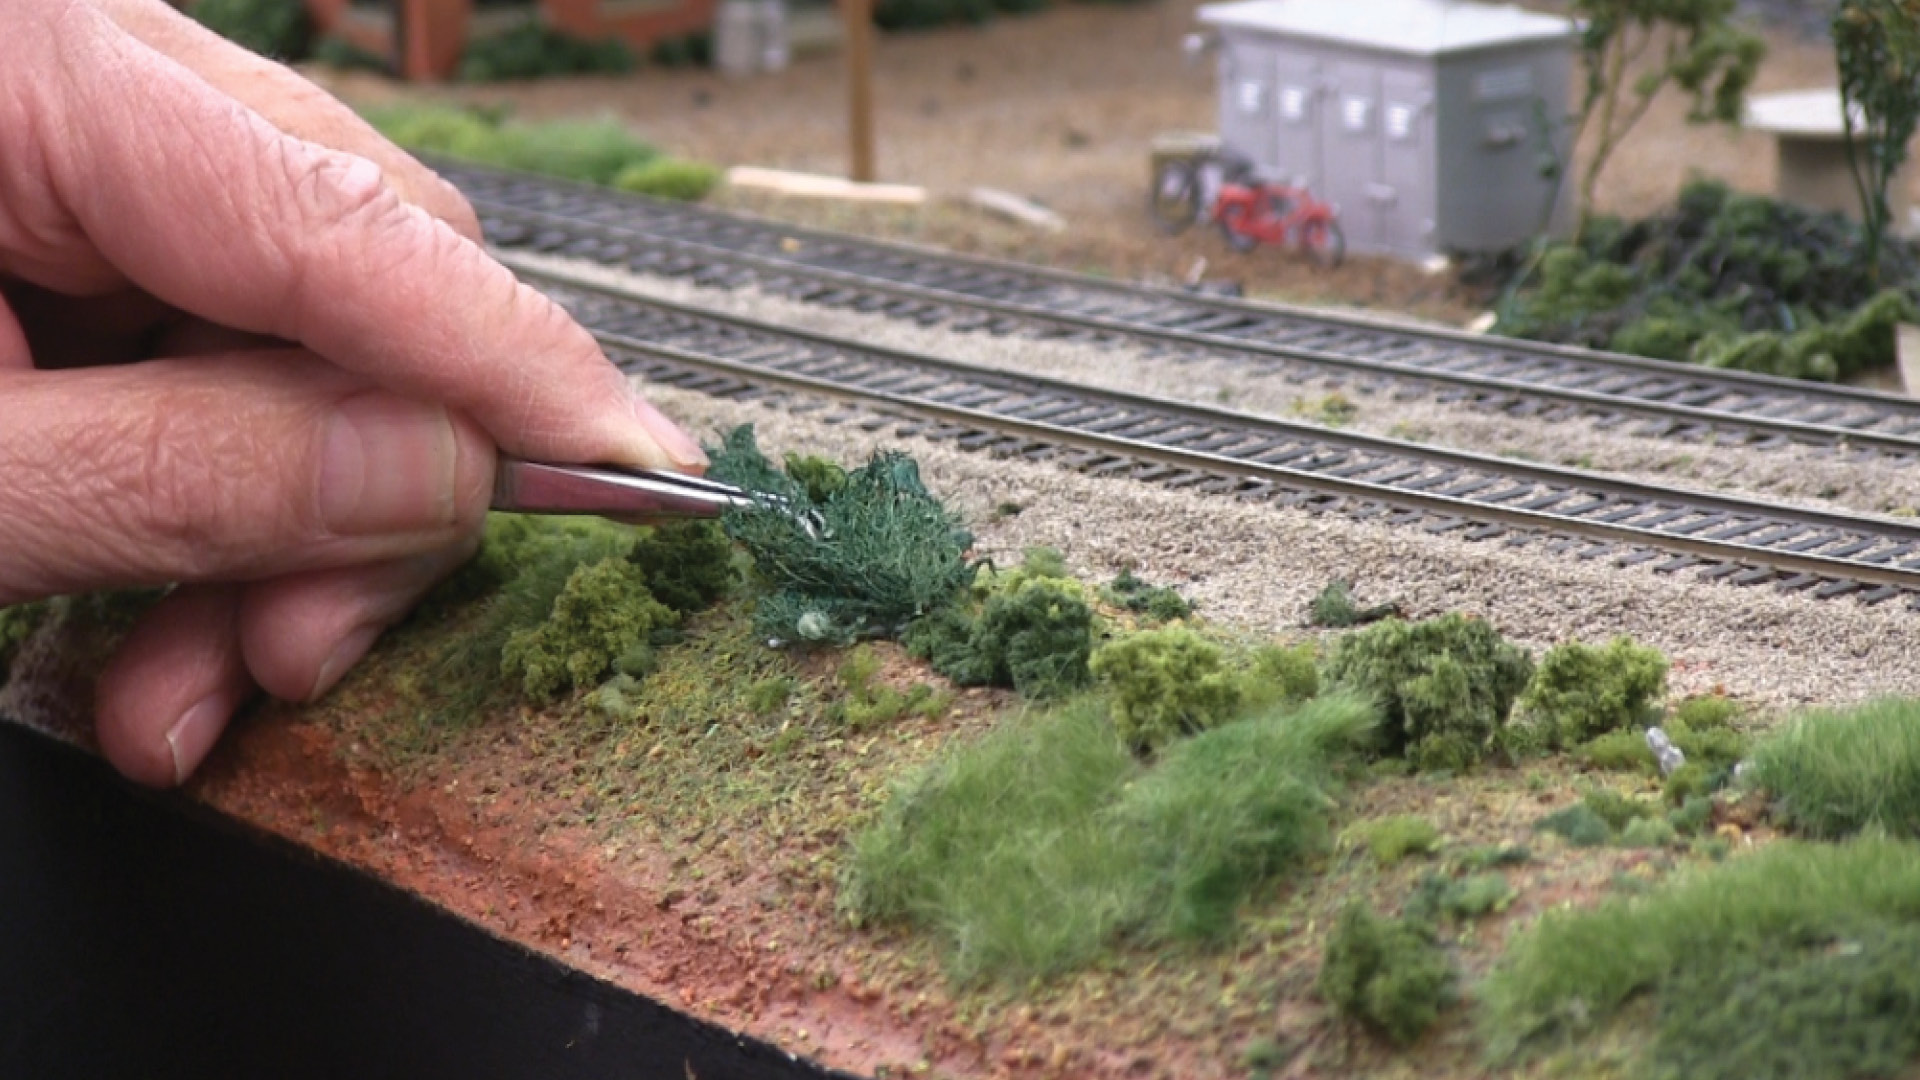 Ideas for Model Railway Bushes Grow on Trees!